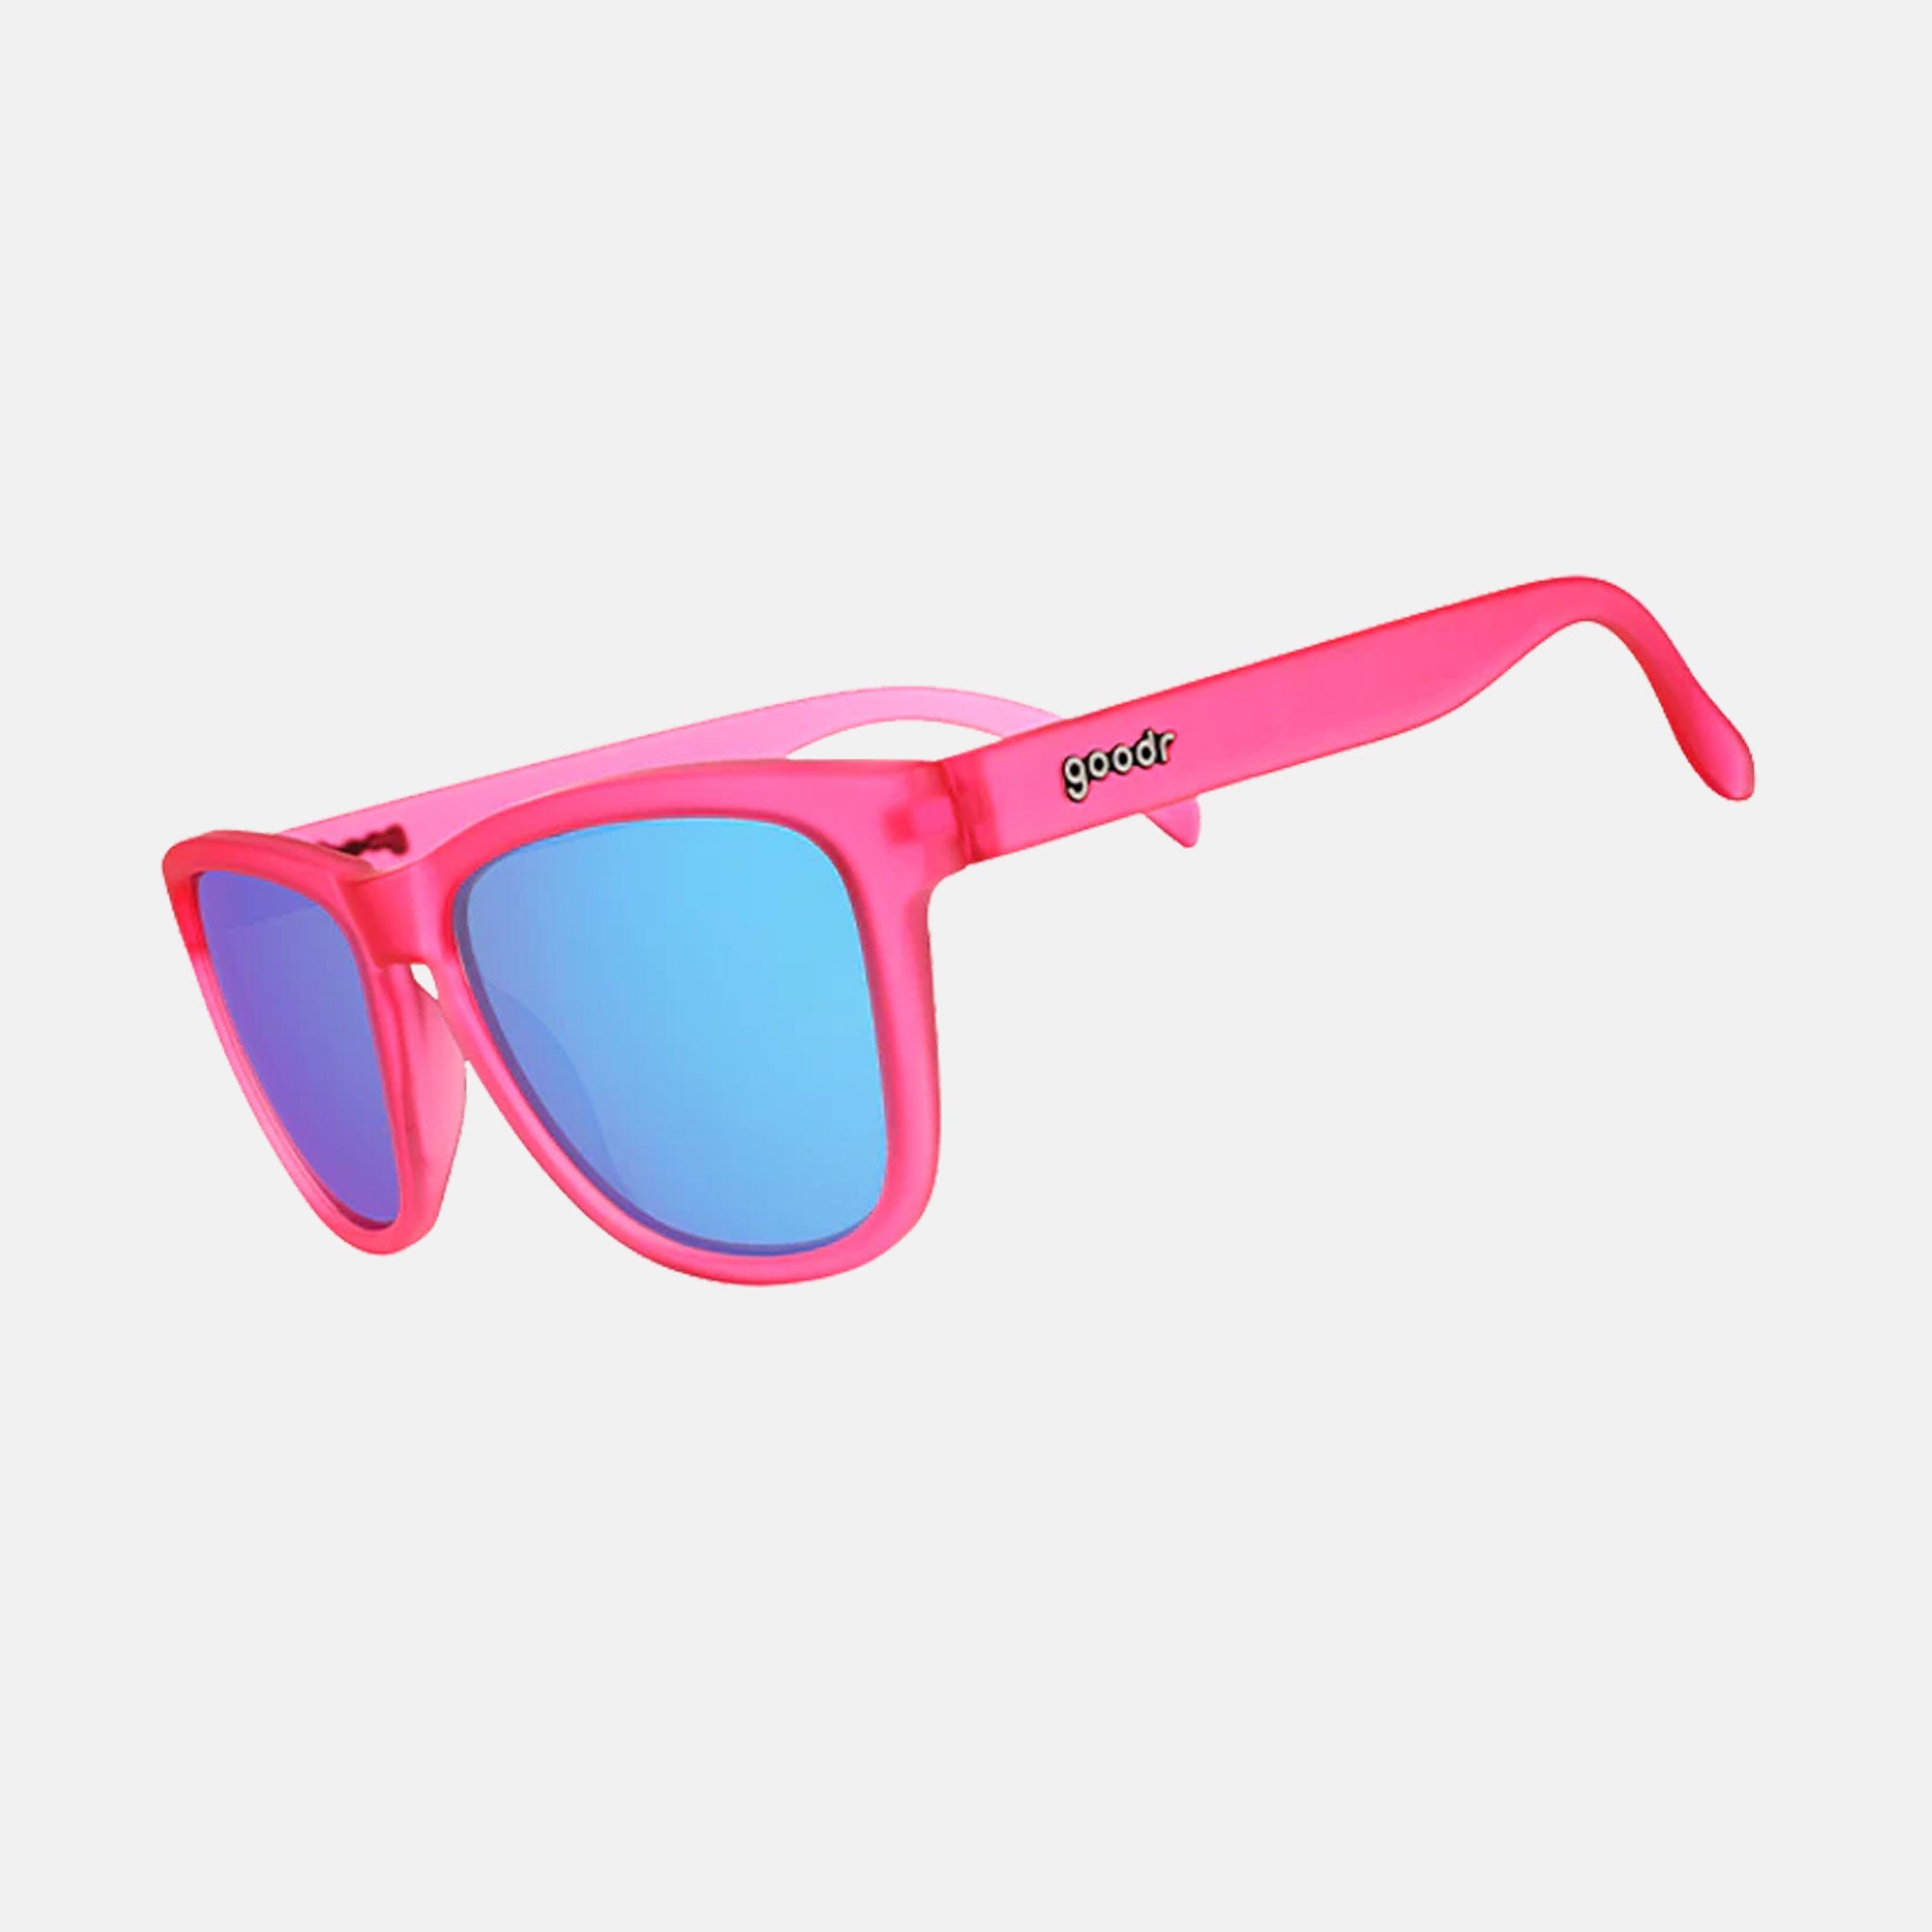 goodr-sunglasses-flamingos-booze-pink_01.jpg